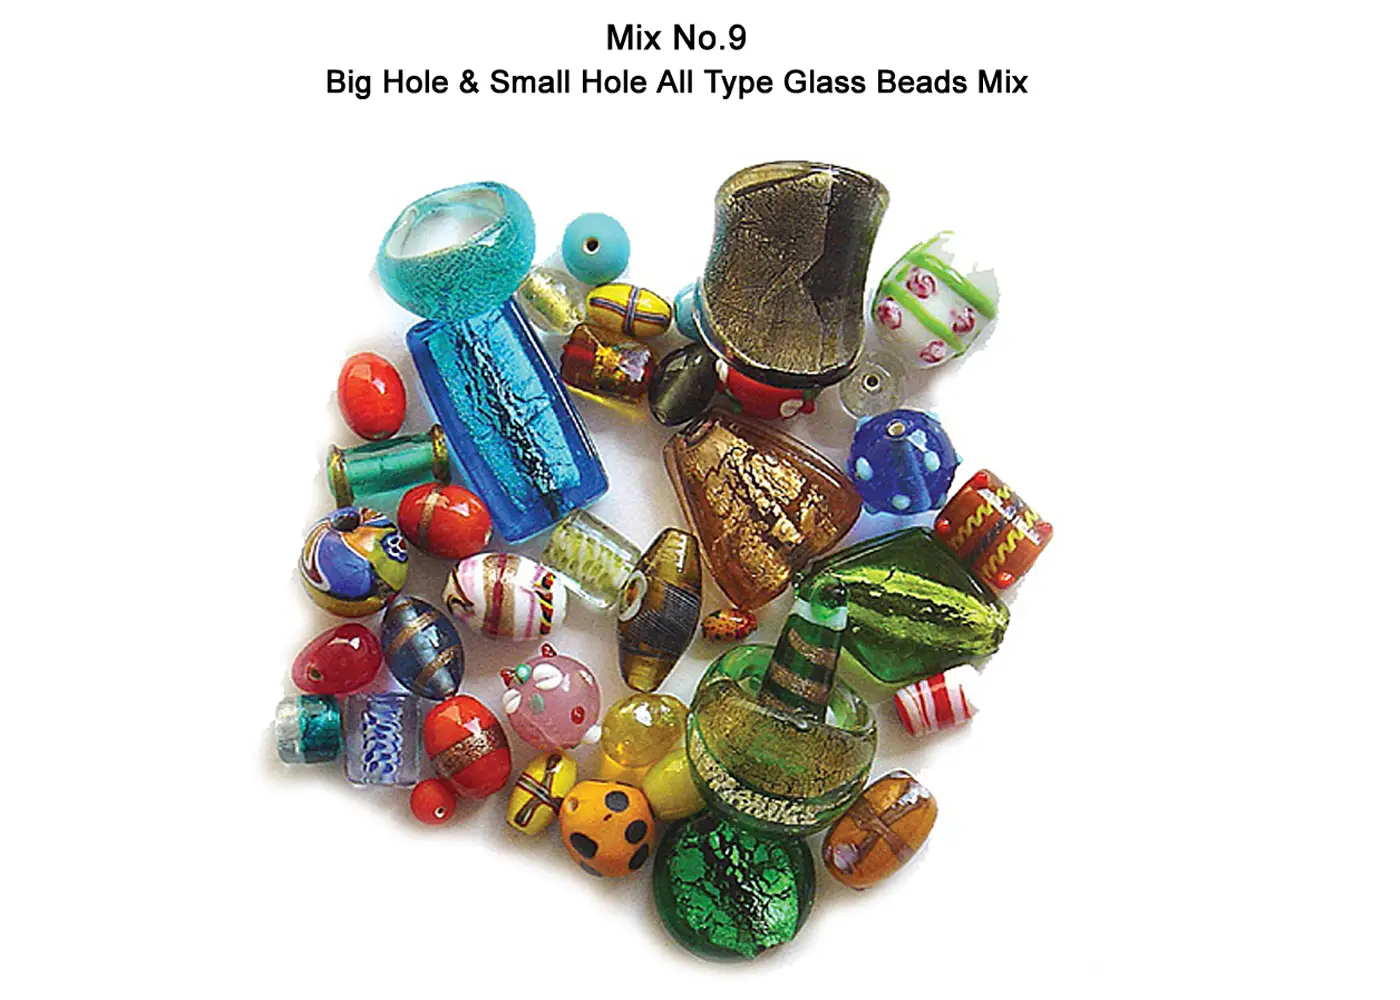 Big Hole & Small Hole All Type Glass Beads Mix